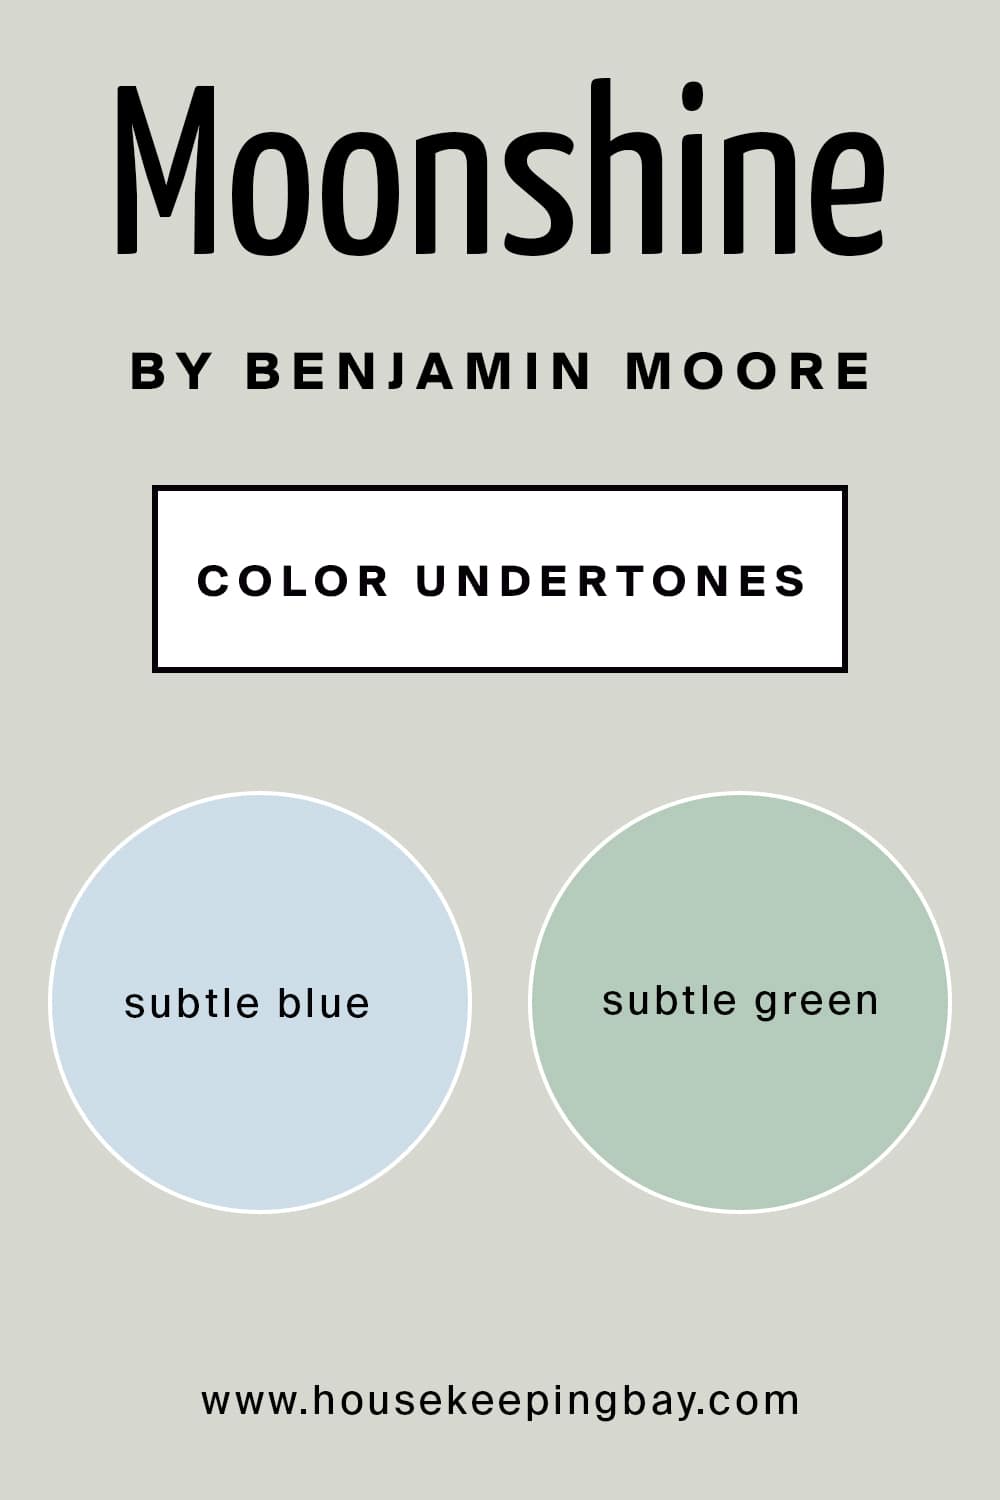 Moonshine by Benjamin Moore Color Undertones